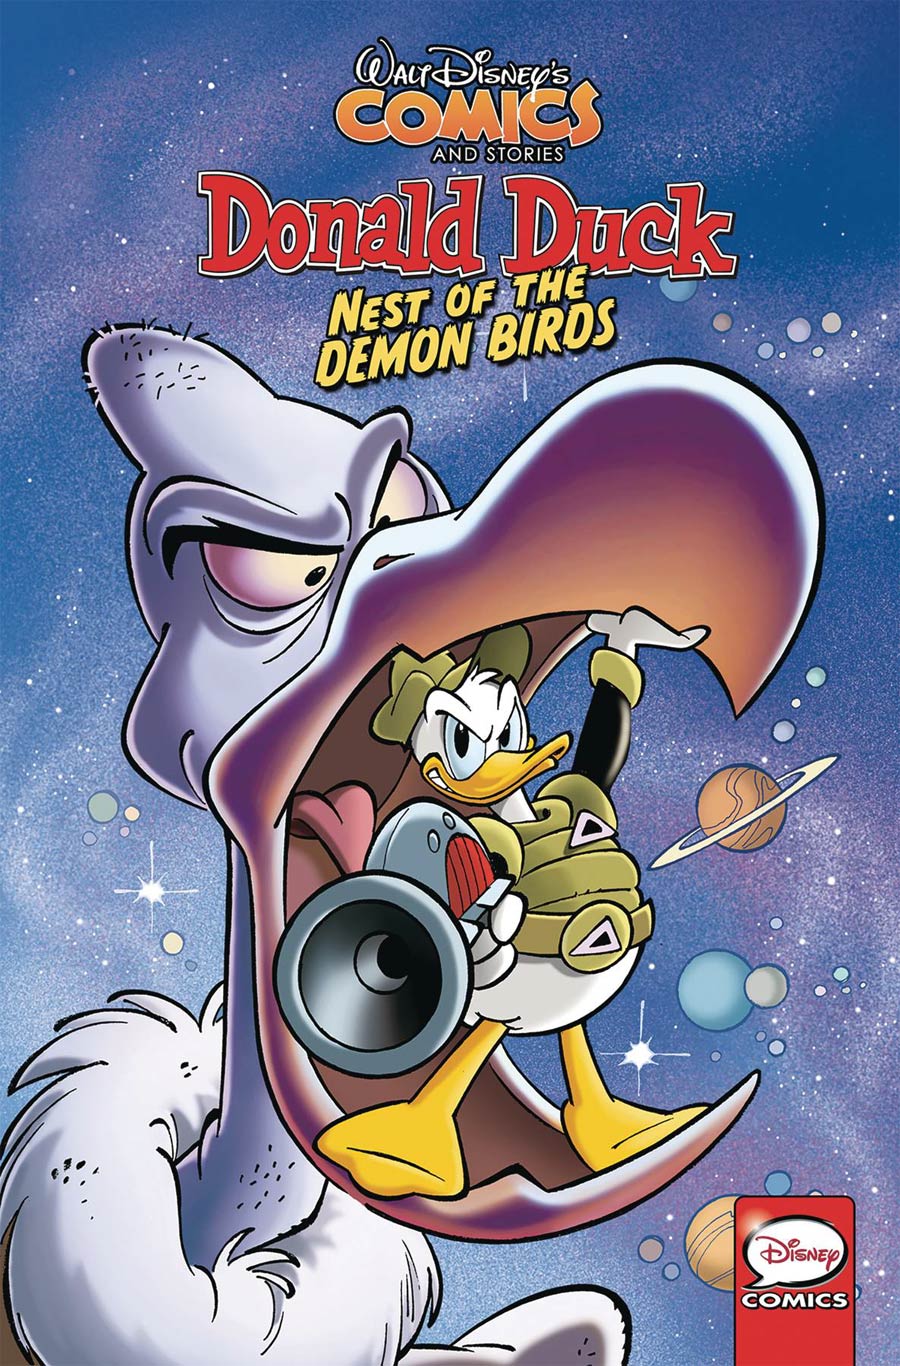 Walt Disneys Comics And Stories Donald Duck Nest Of The Demon Birds TP